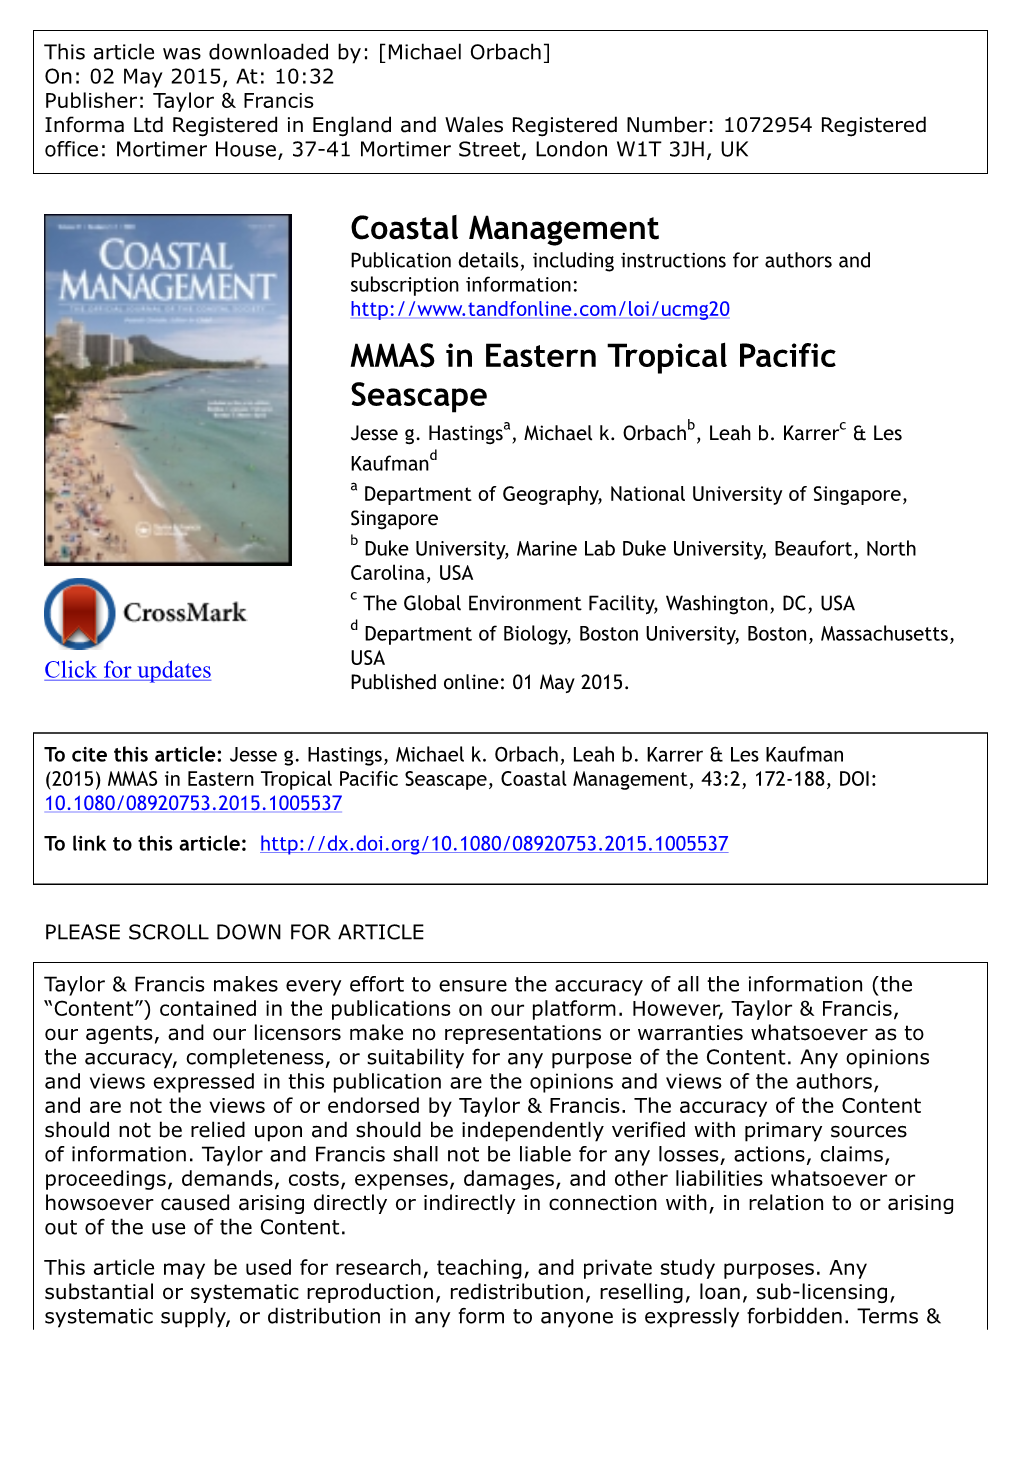 Coastal Management MMAS in Eastern Tropical